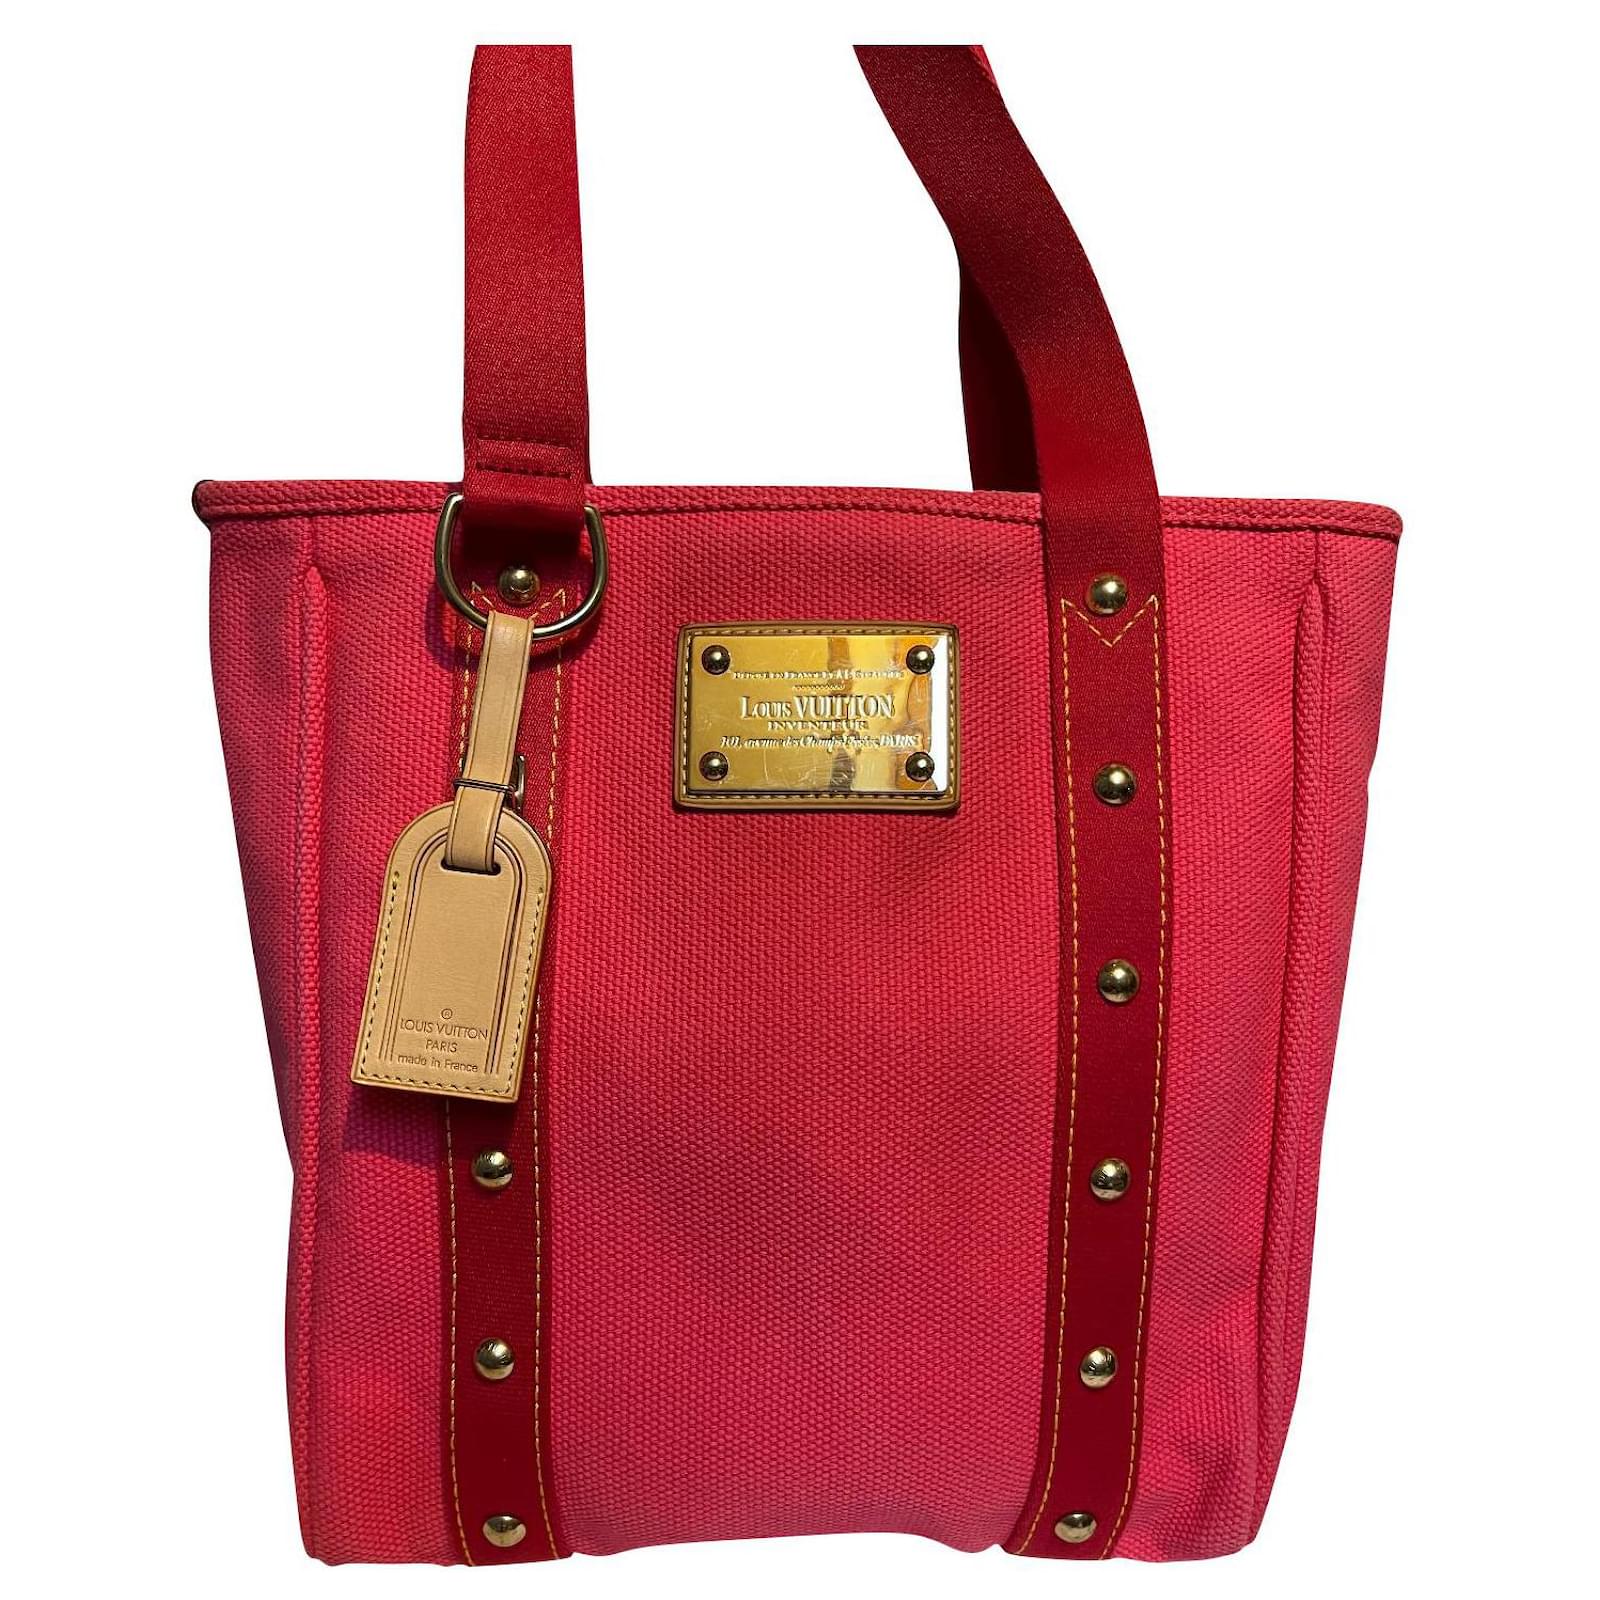 louis vuitton straps for handbags